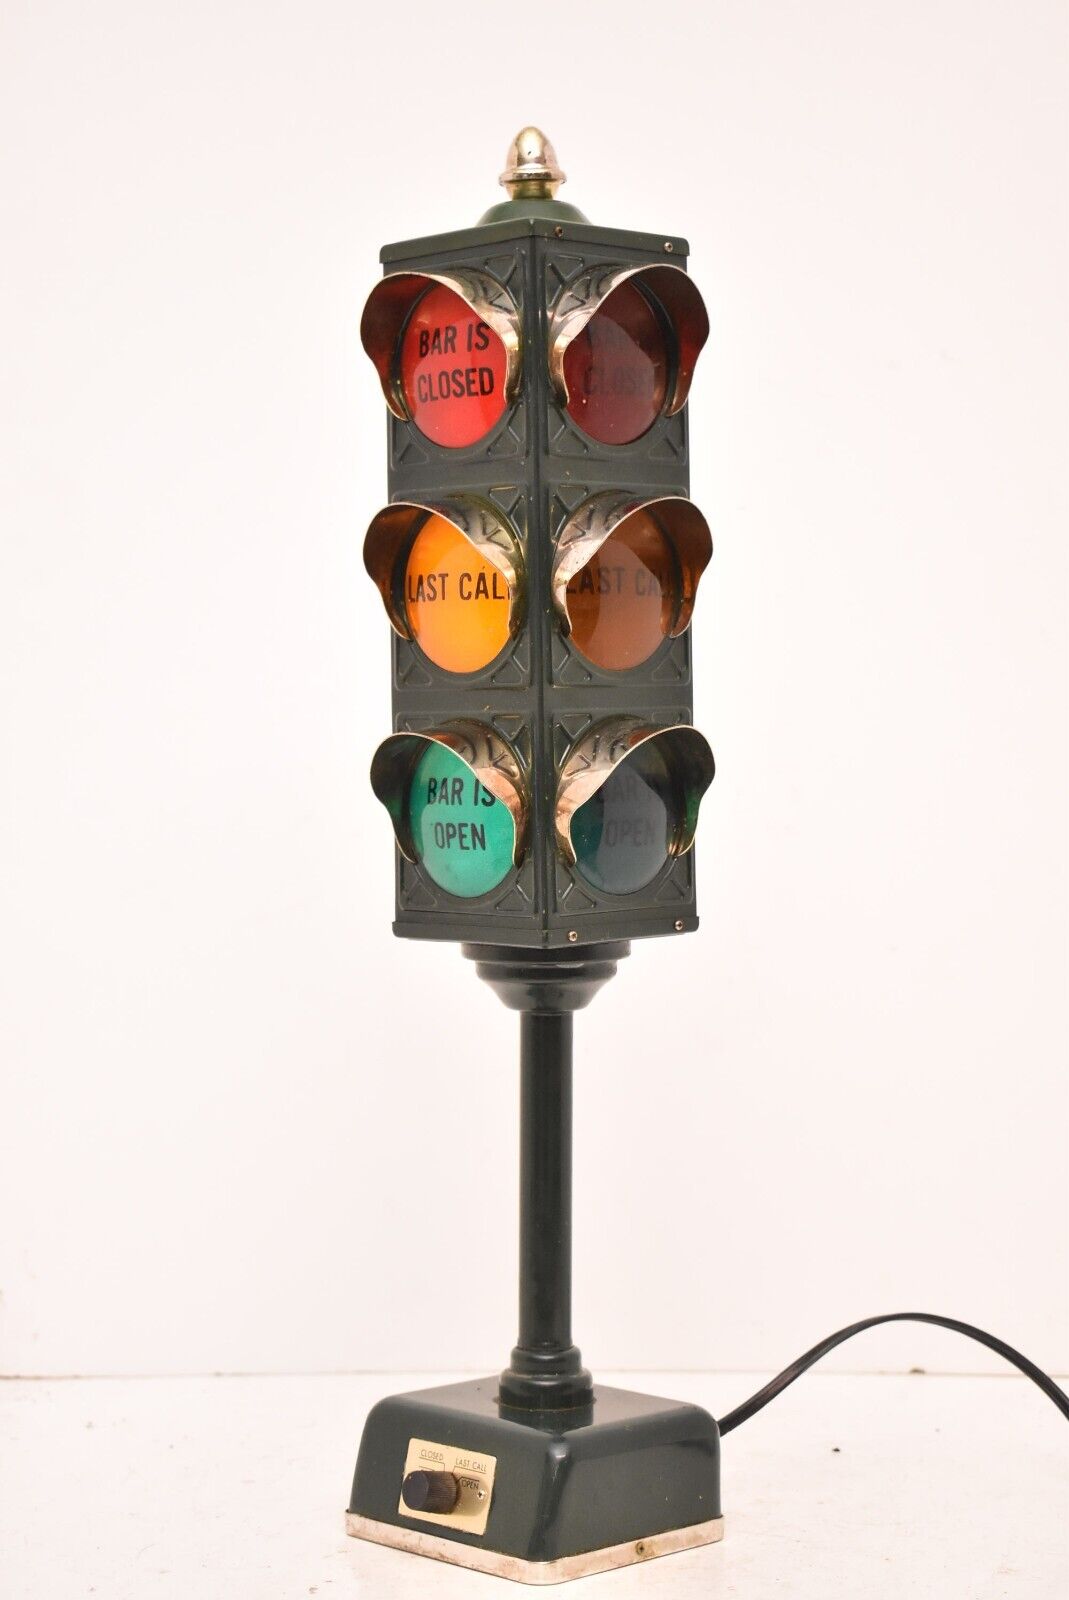 VTG 1960s B&B Bar Lamp Stop Light Traffic Signal OPEN CLOSED LAST CALL MAN CAVE}